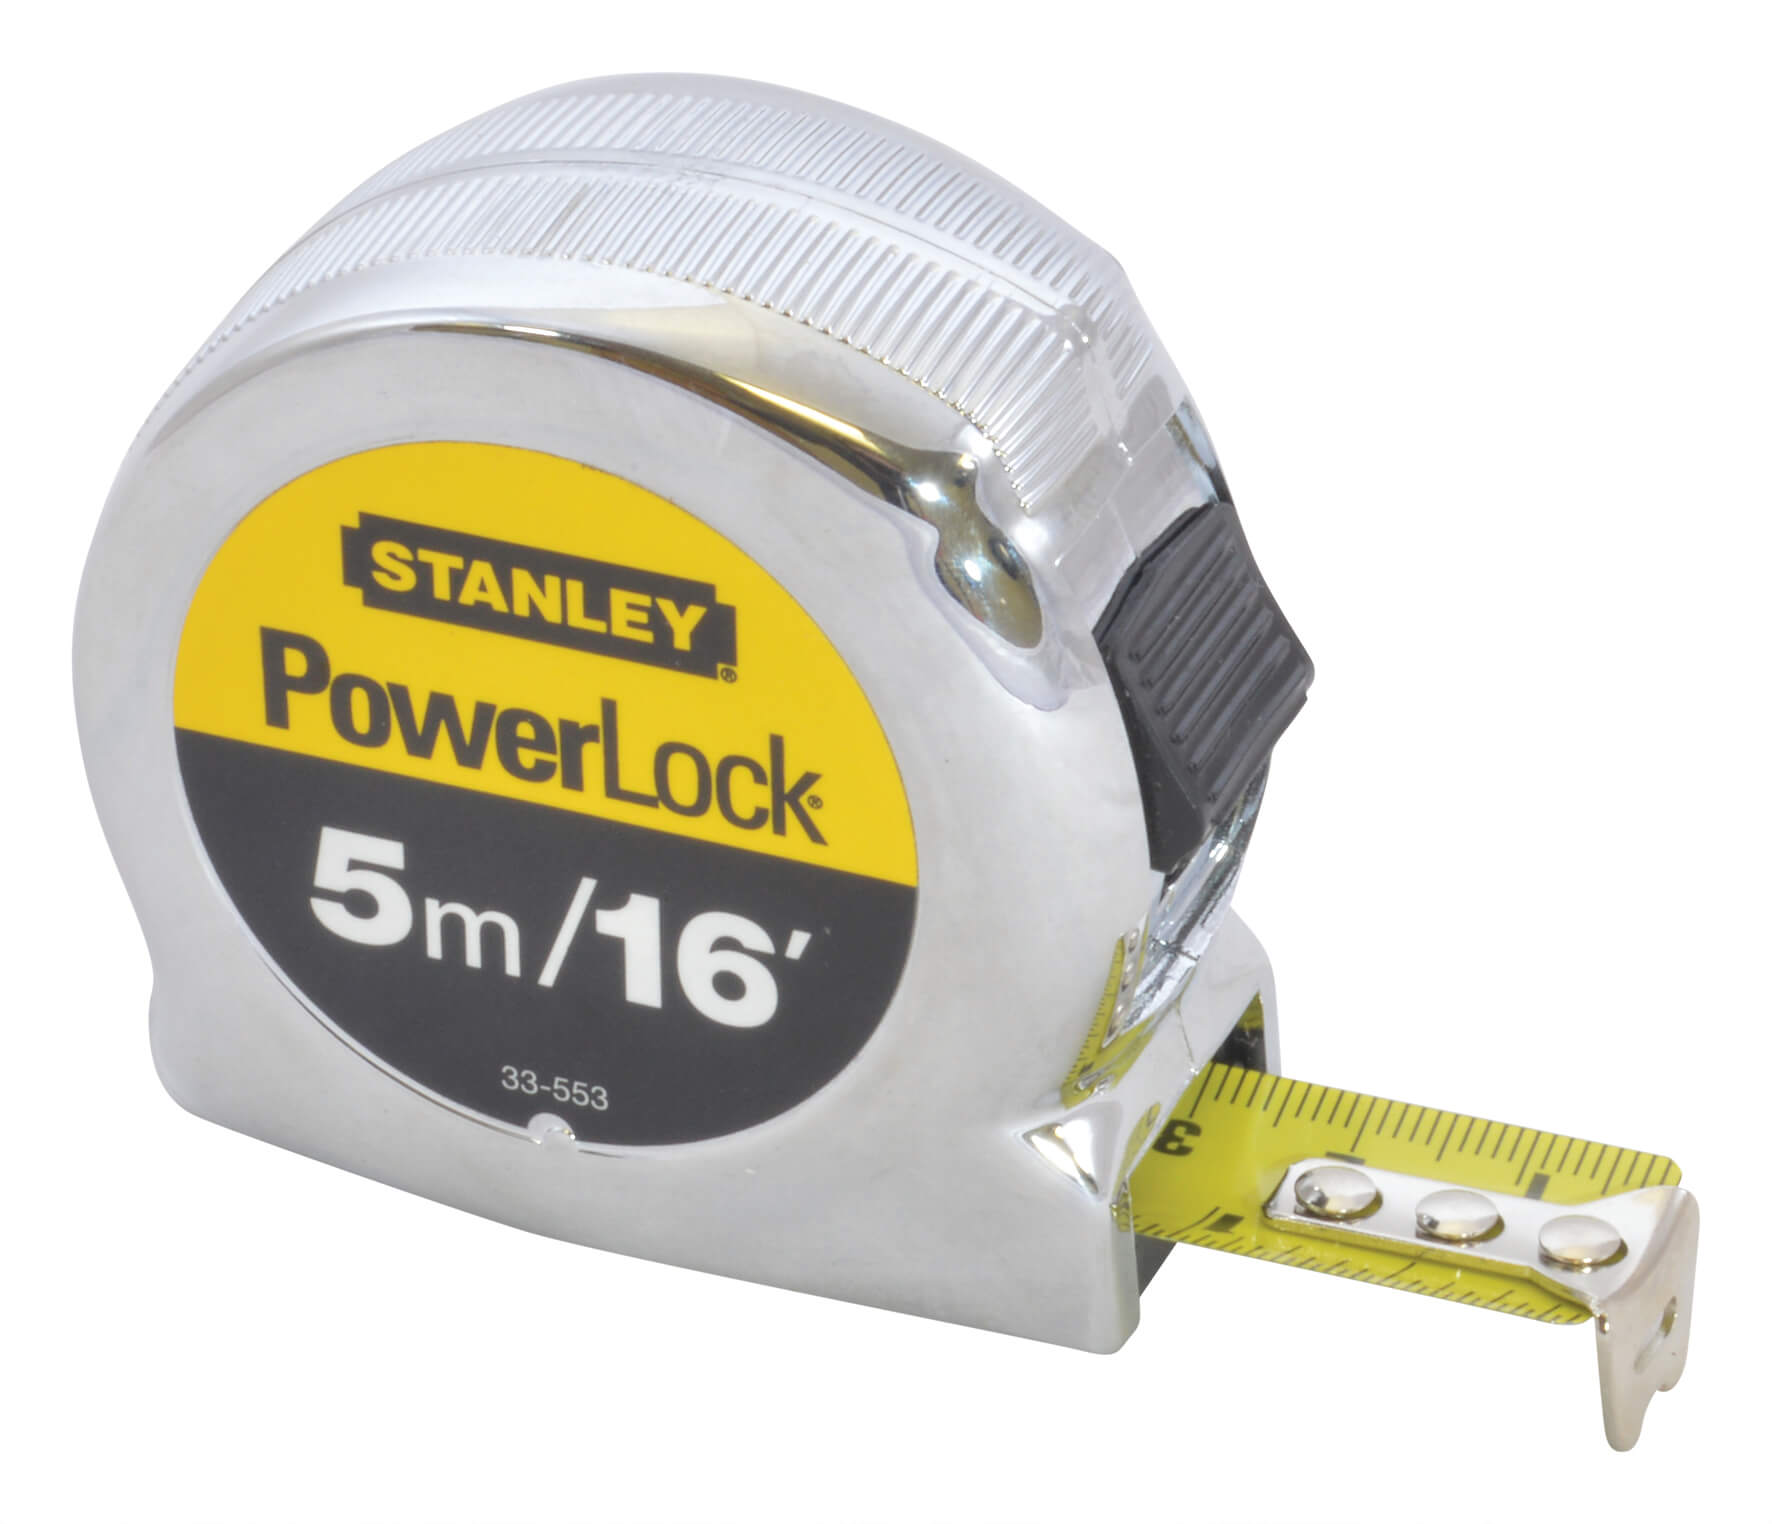 Stanley Powerlock Tape - 5m/16ft